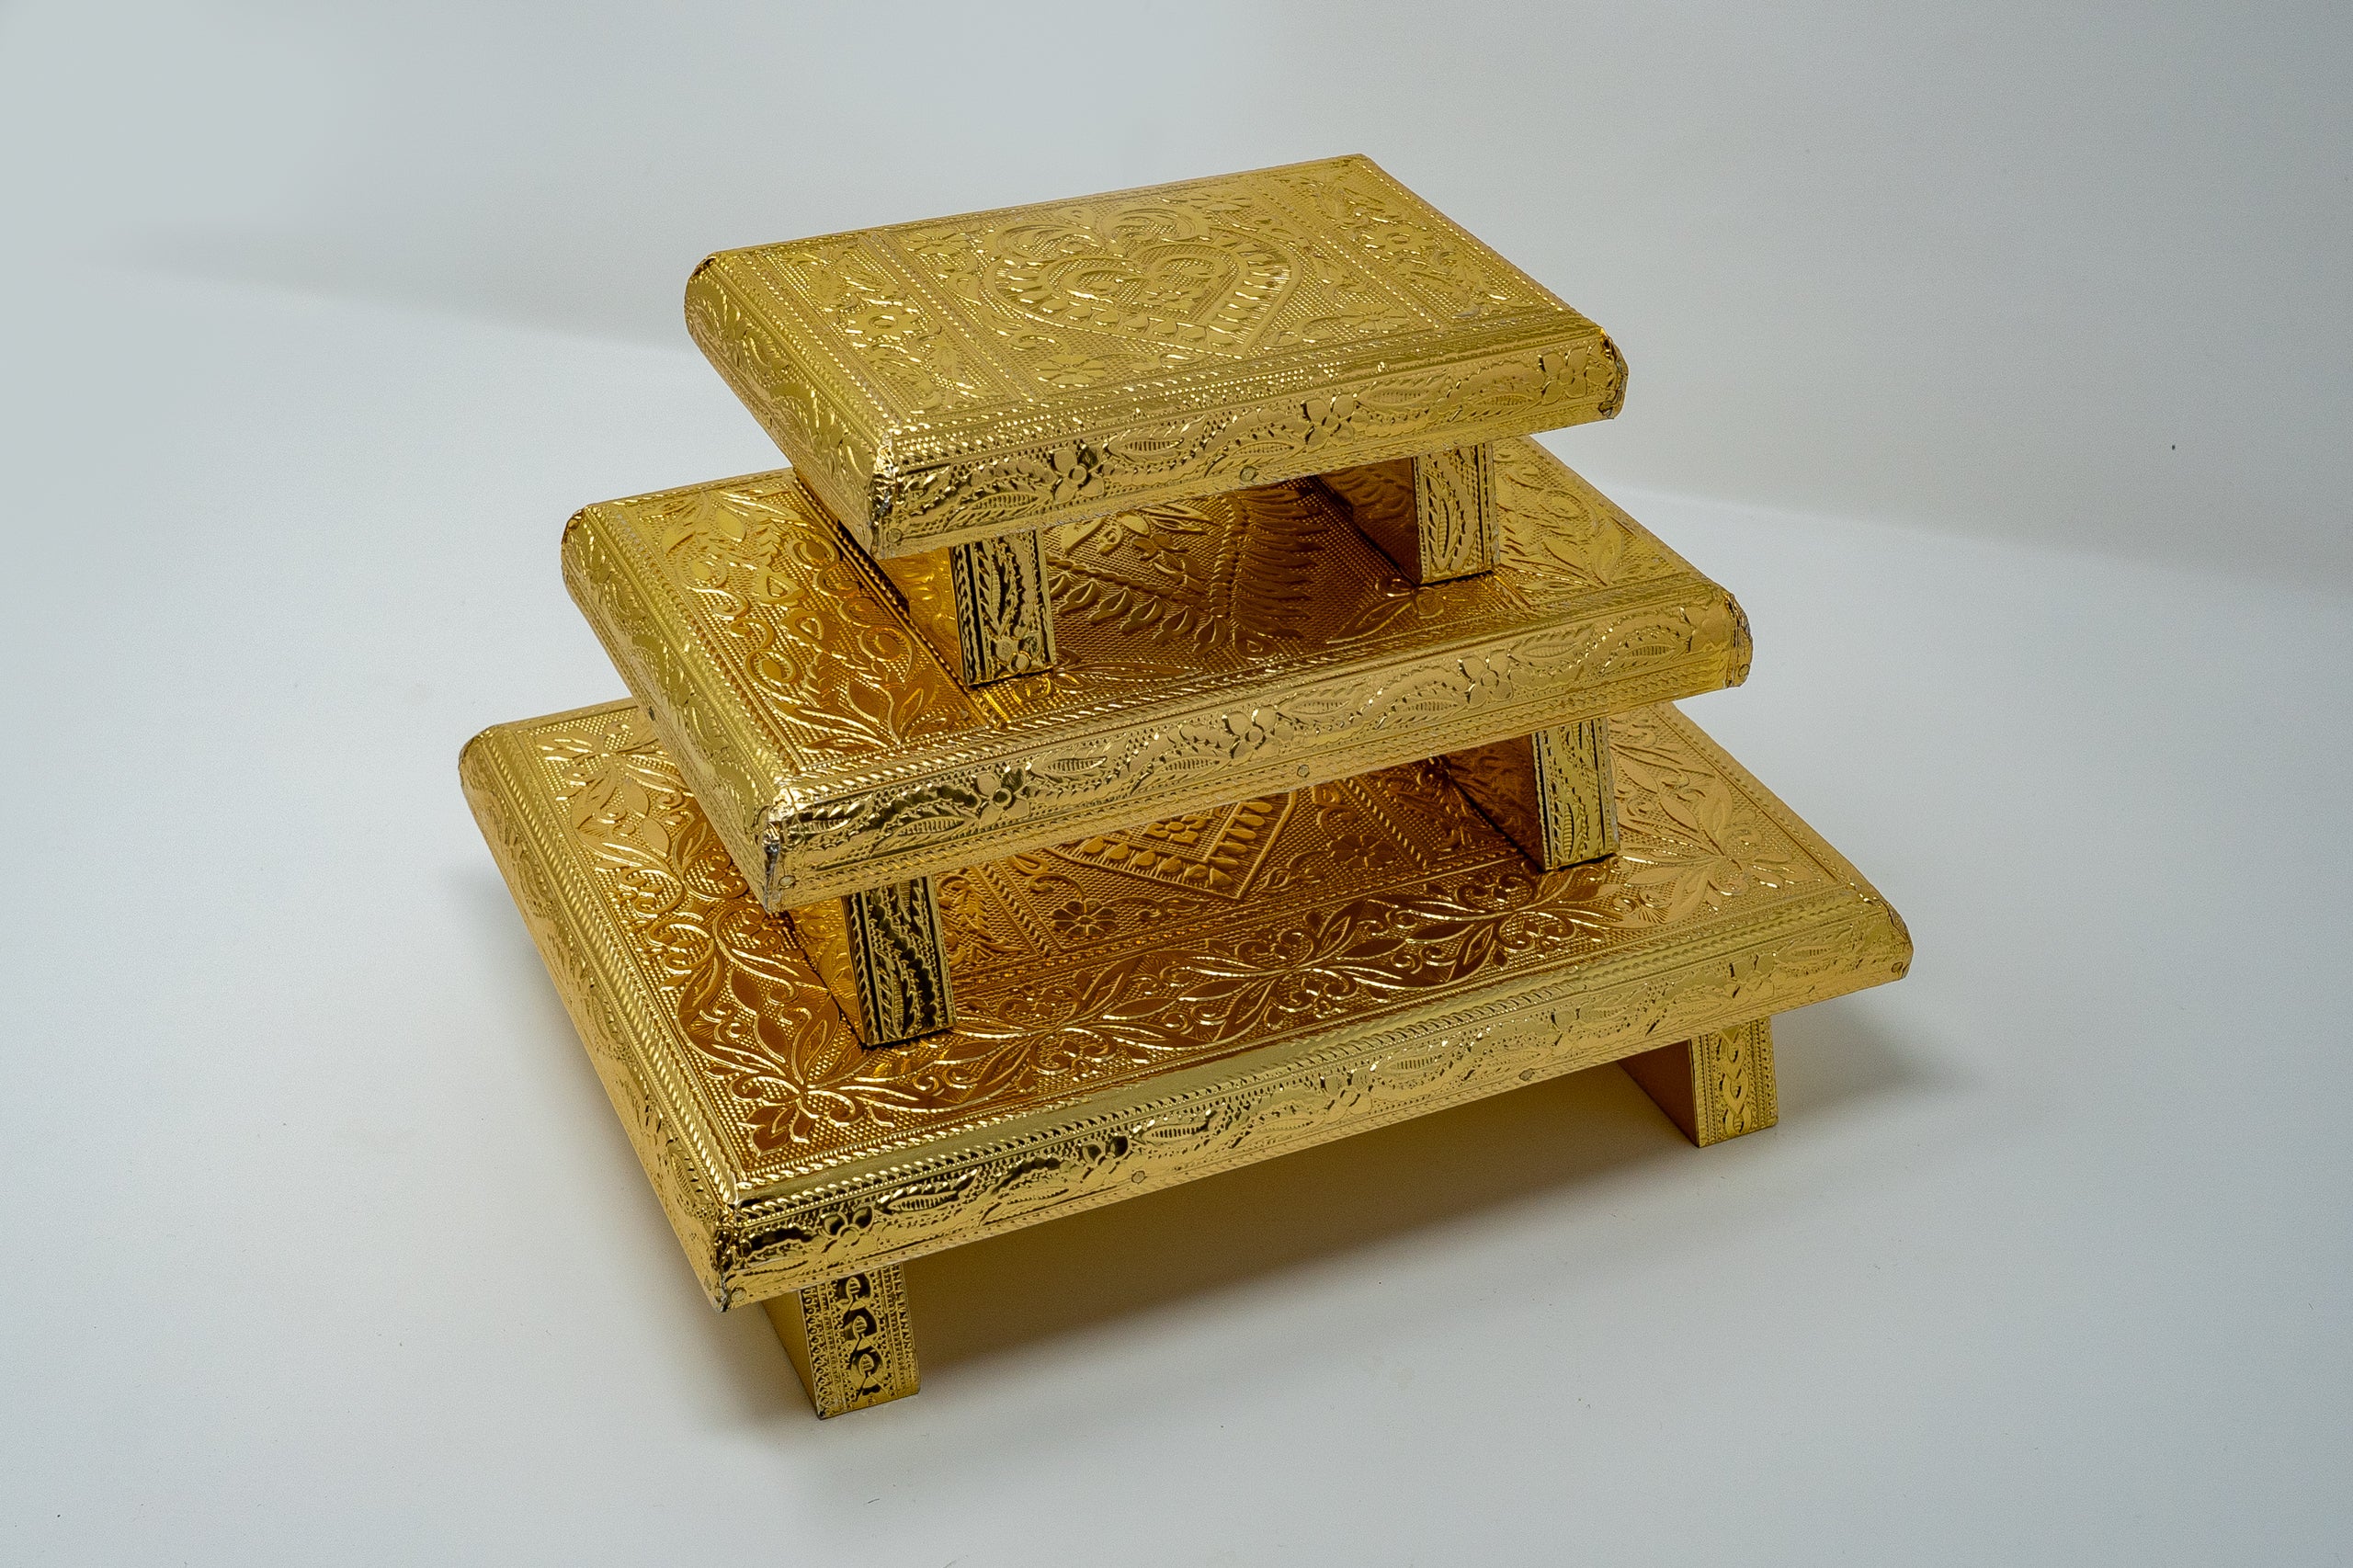 Asanam/Puja Plate Table, golden